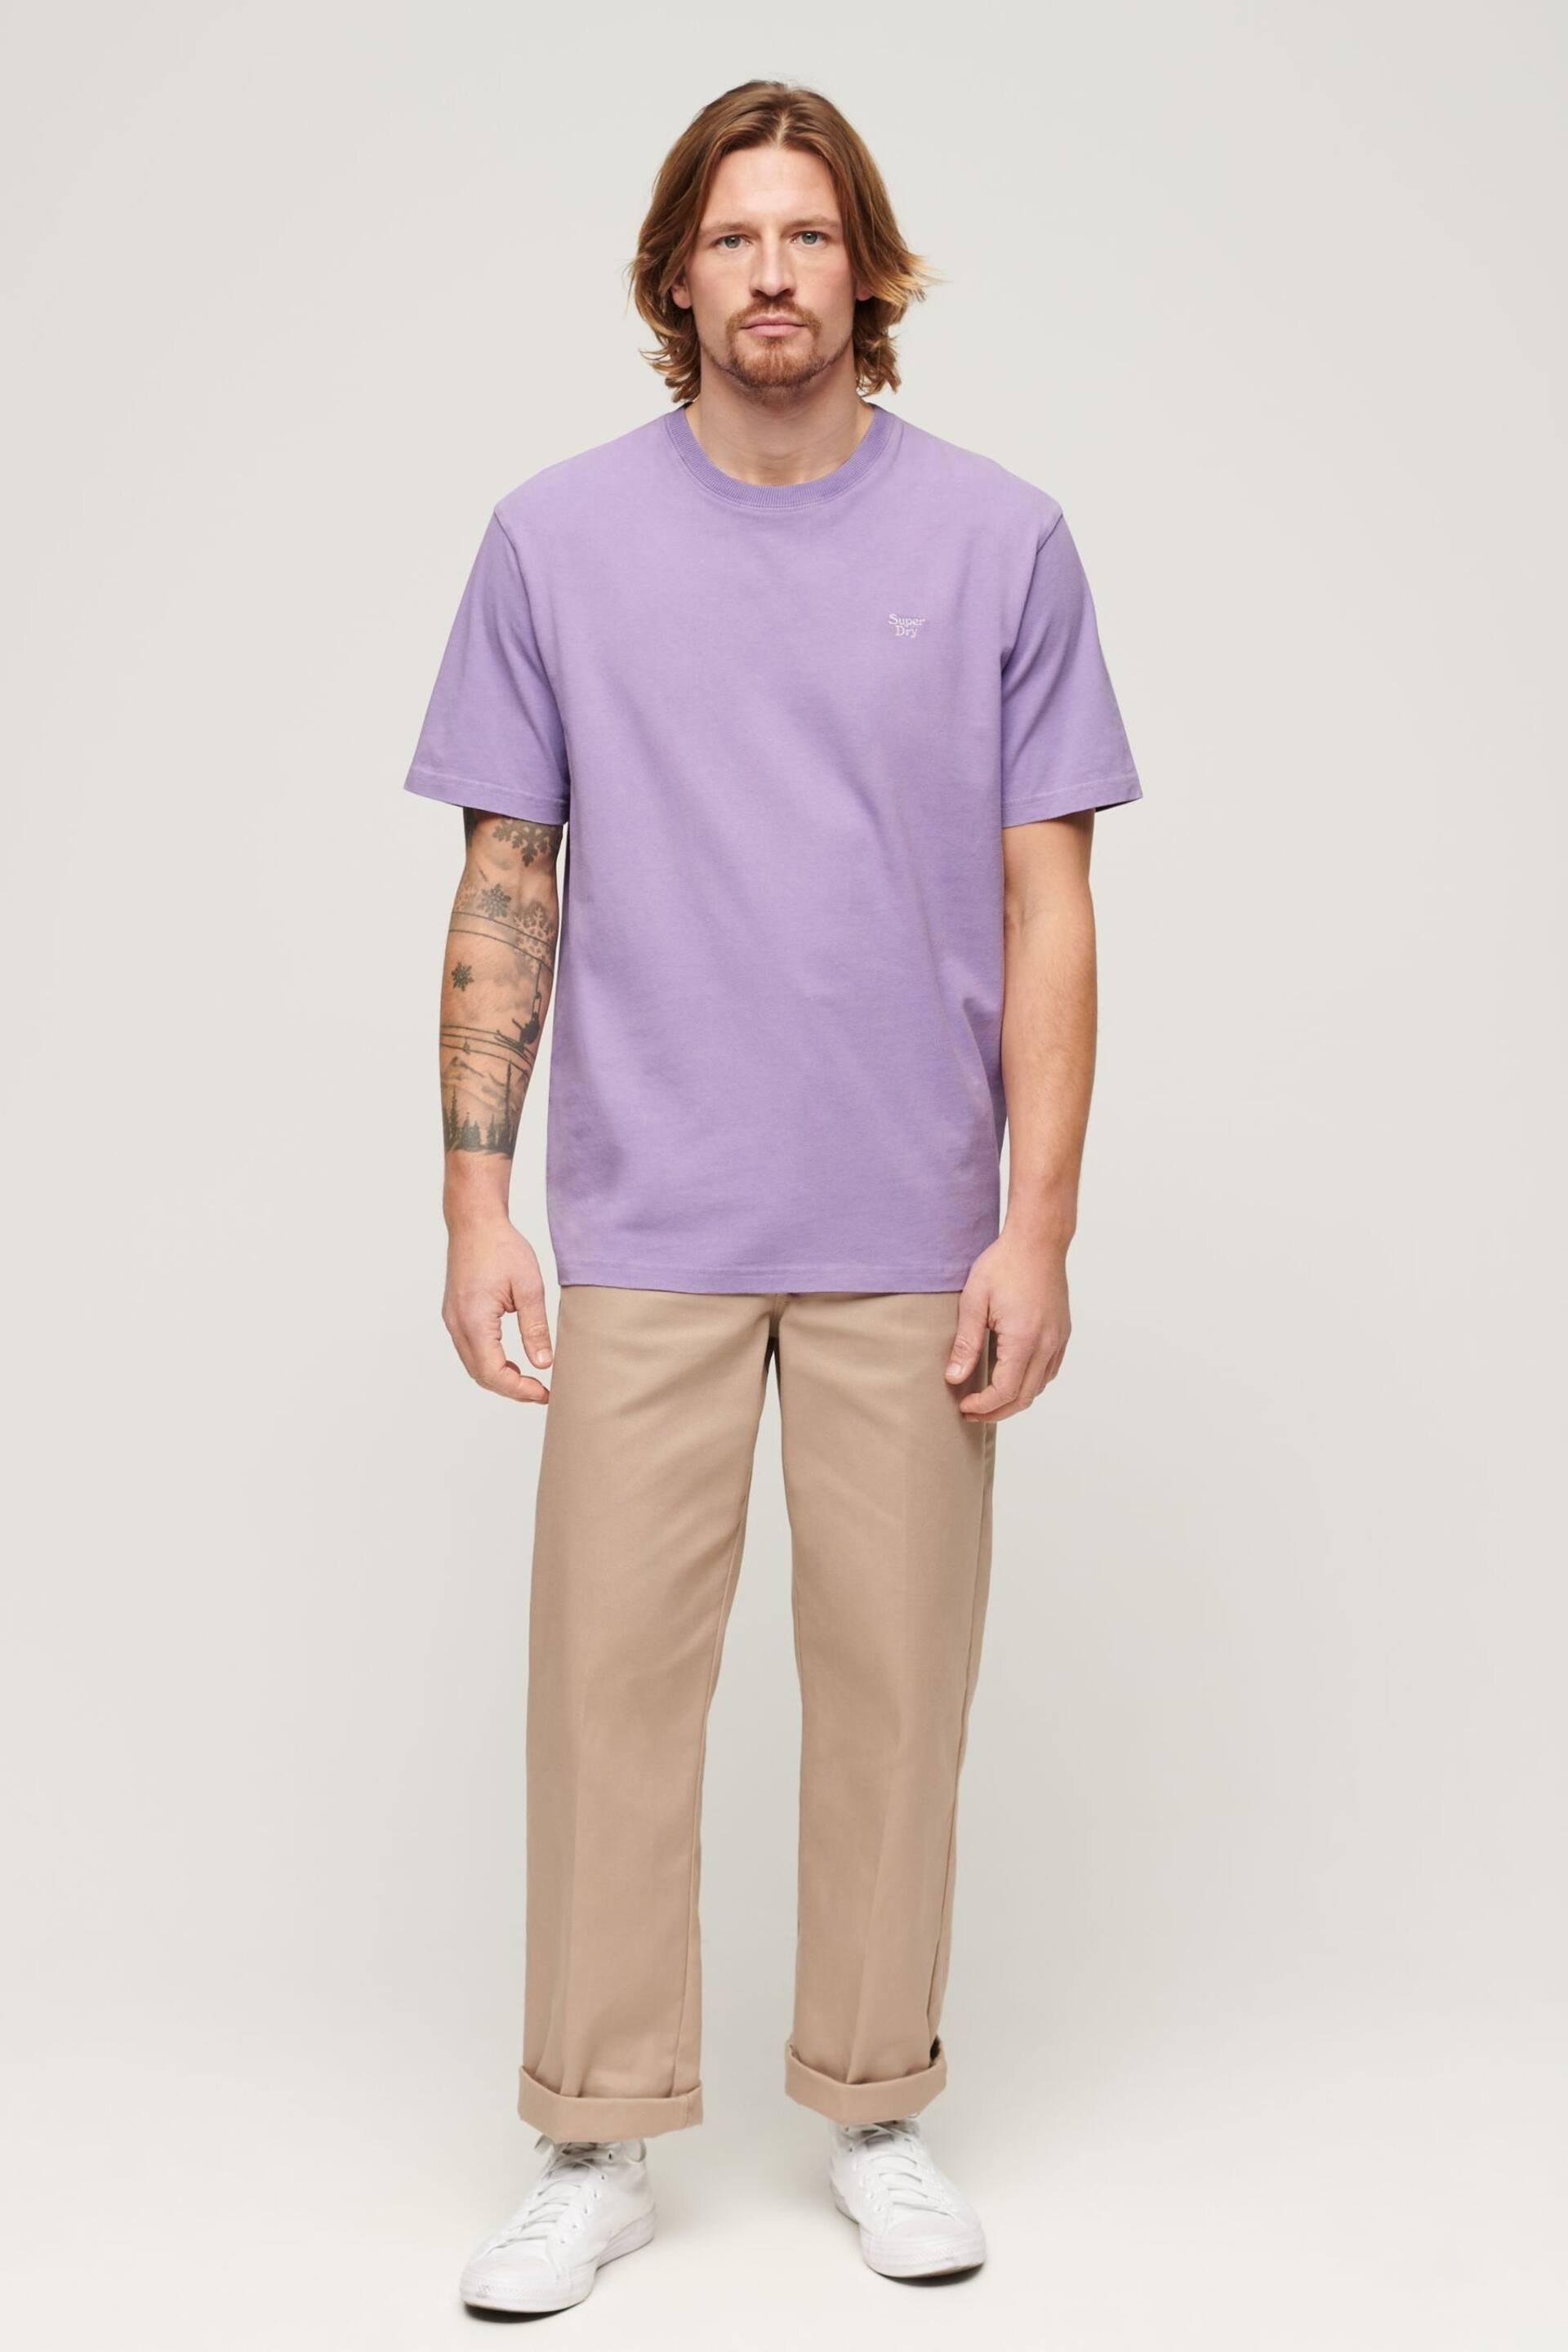 Superdry Purple Vintage Washed T-Shirt - Image 2 of 5